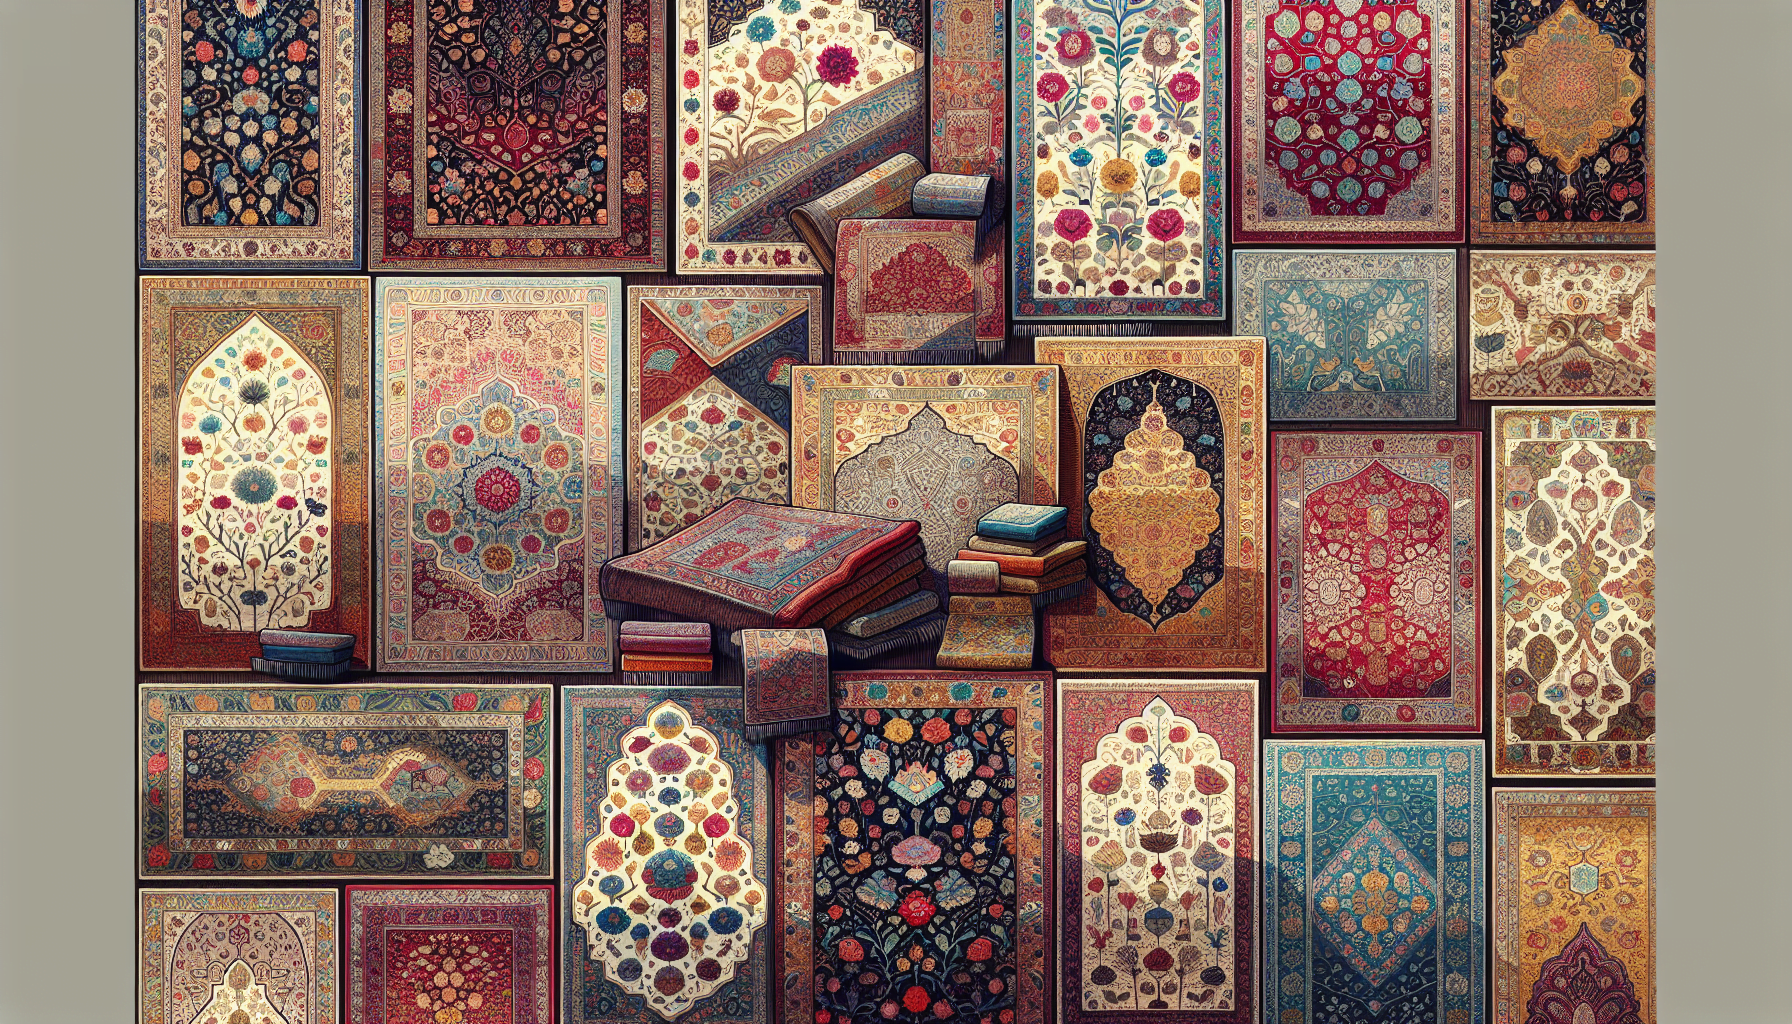 Illustration of various regional styles of persian rugs